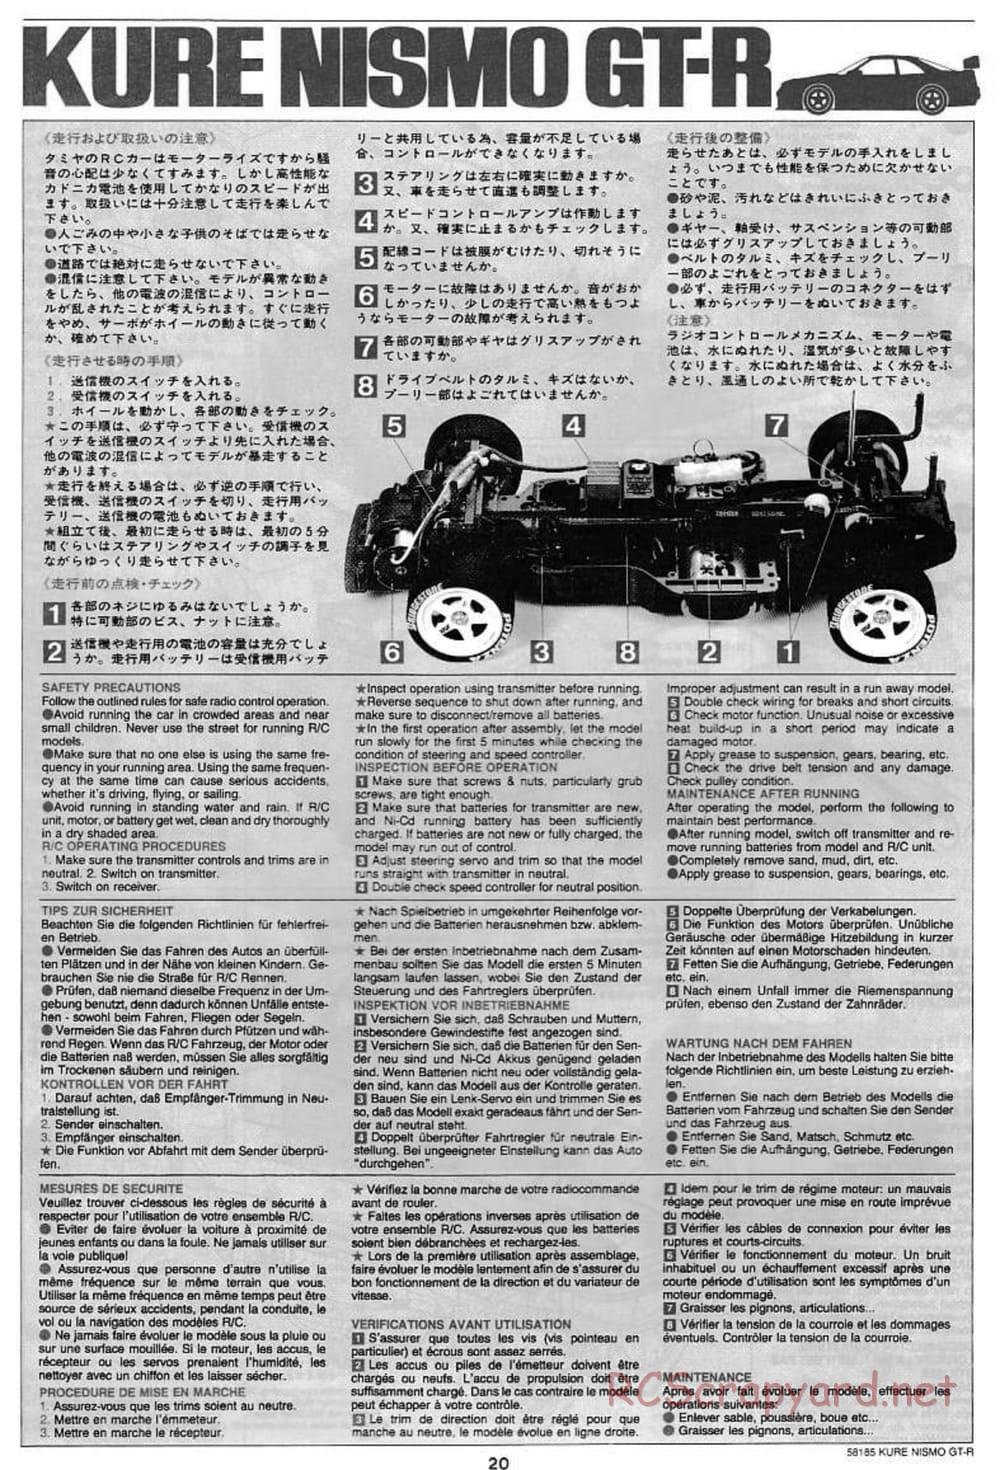 Tamiya - Kure Nismo GT-R - TA-03F Chassis - Manual - Page 20